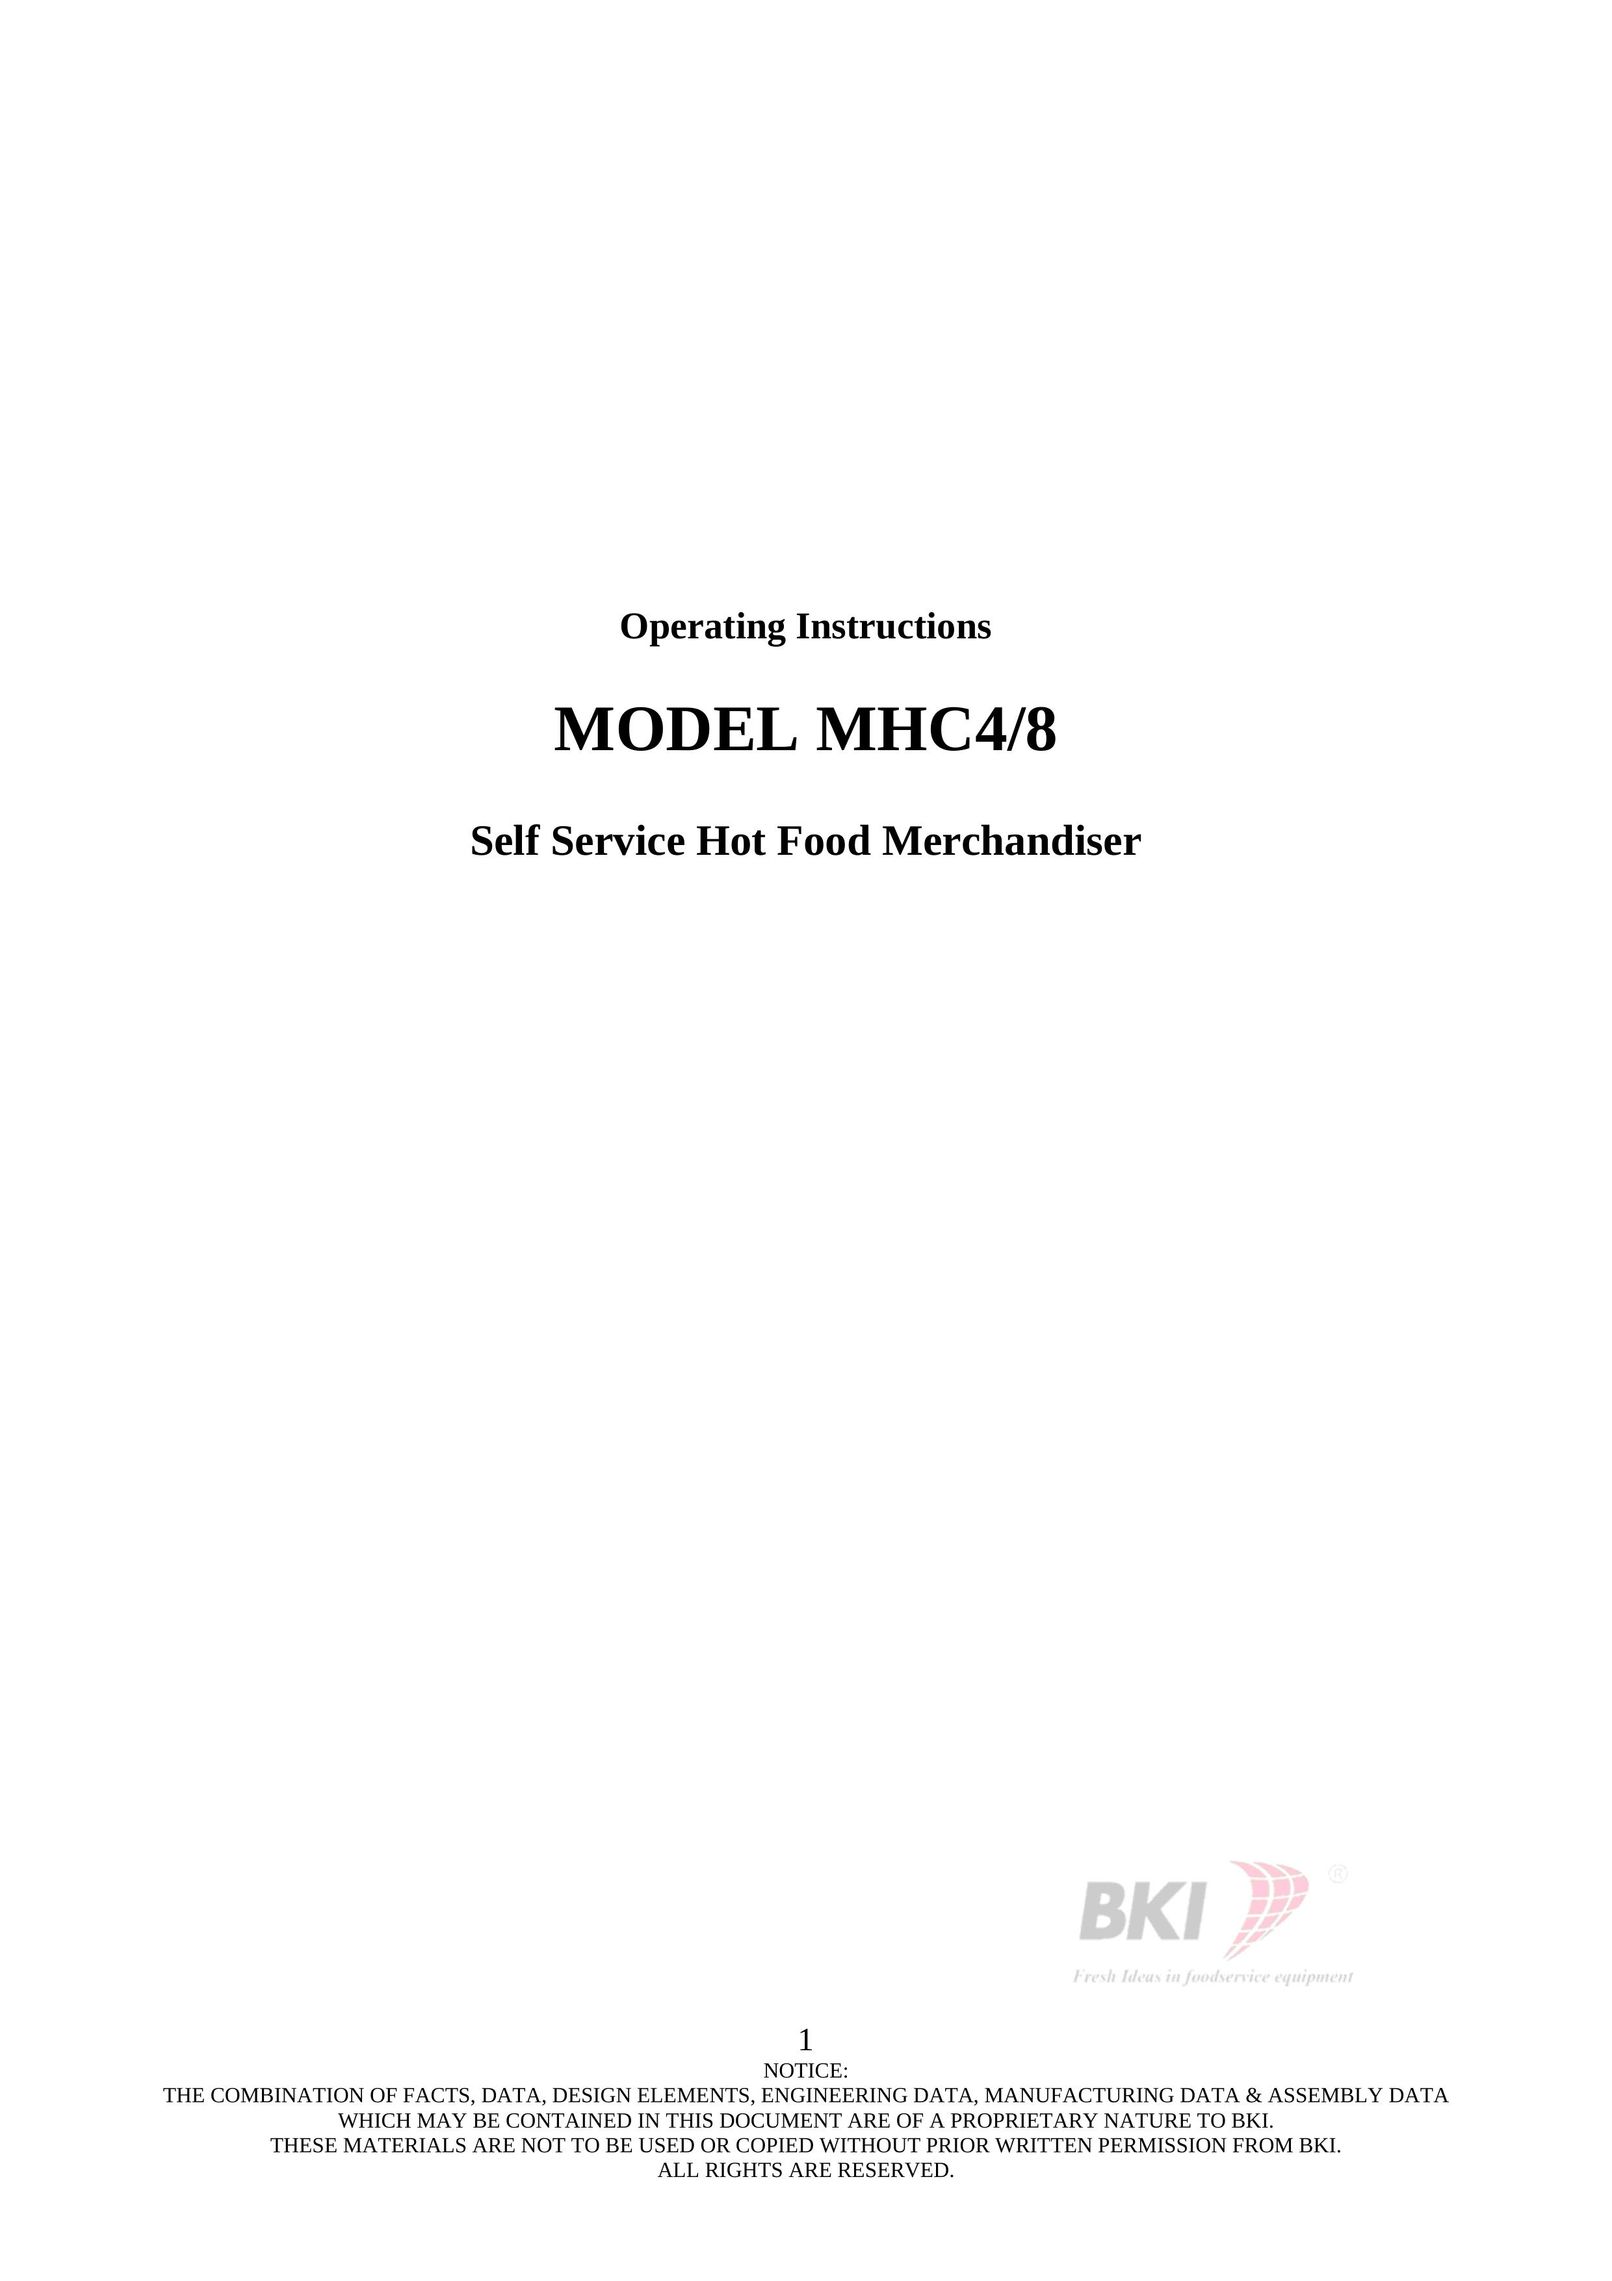 Bakers Pride Oven MODEL MHC4/8 Food Warmer User Manual